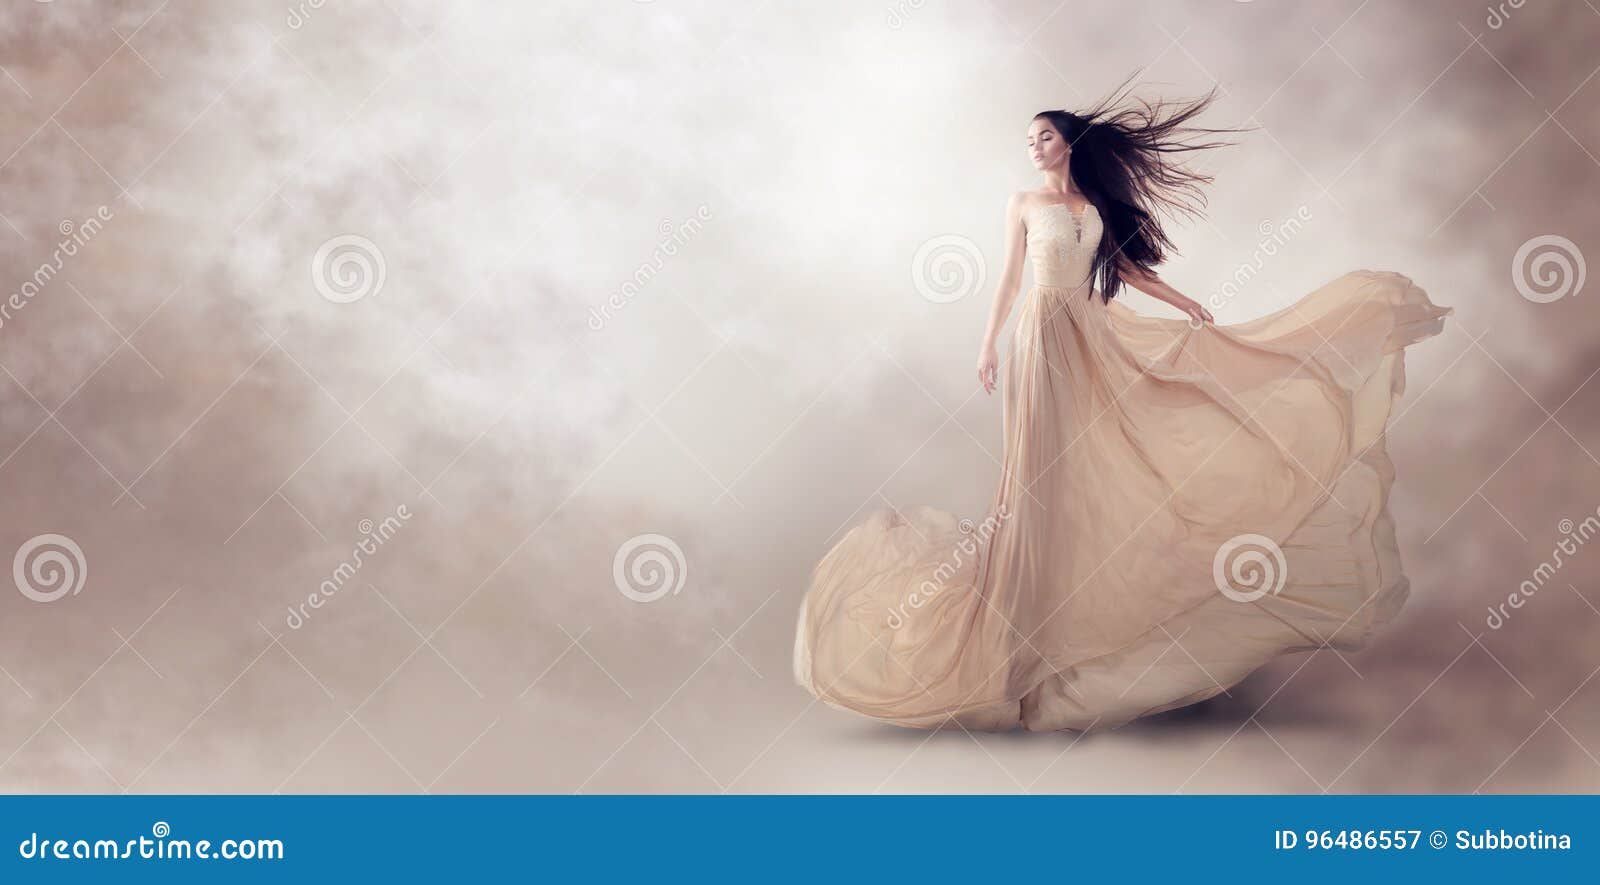 fashion model in beautiful beige flowing chiffon dress